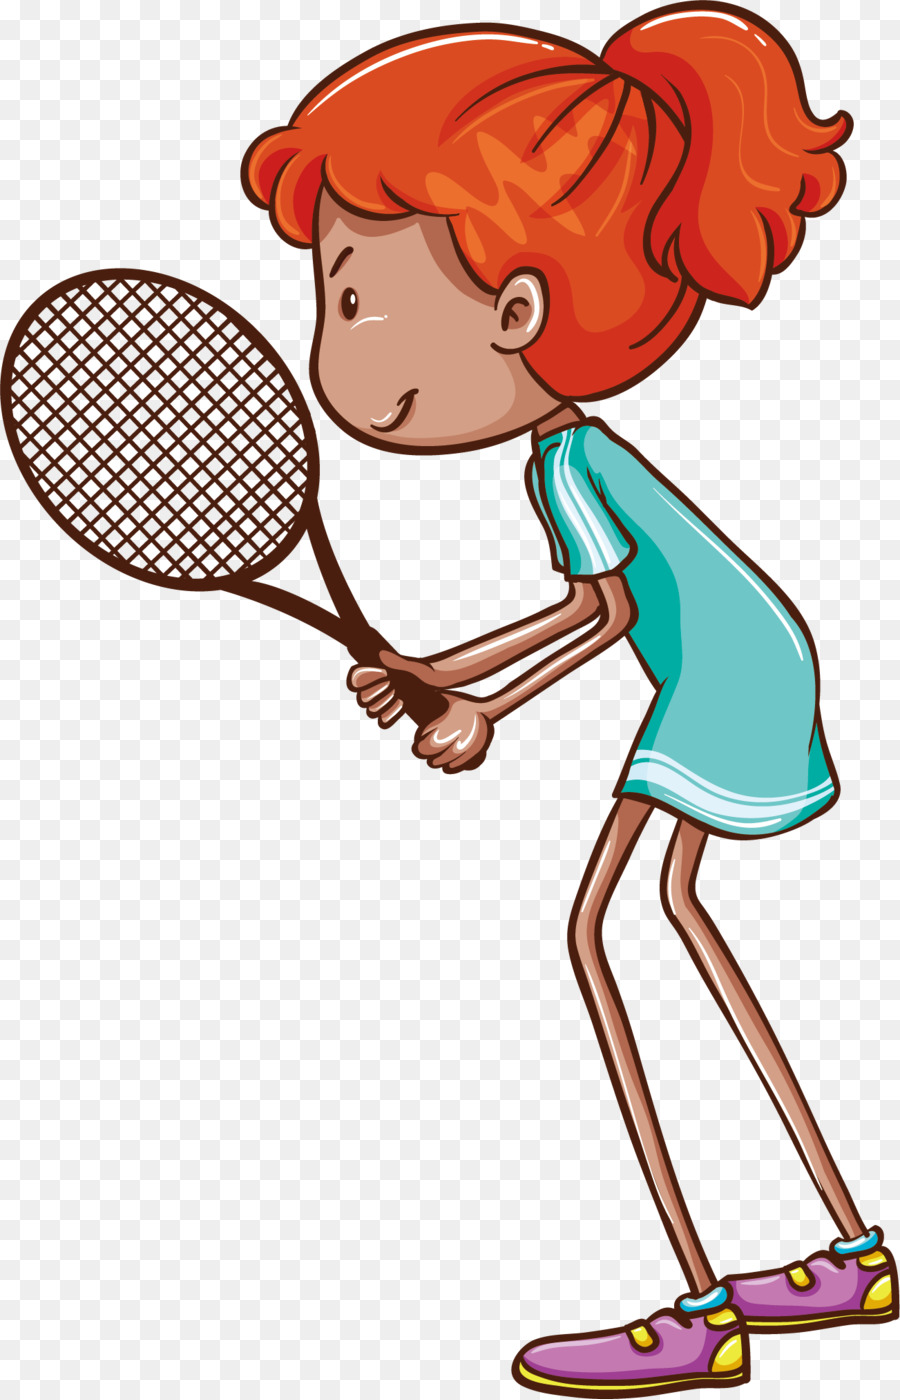 Tennis Player Drawing at GetDrawings Free download